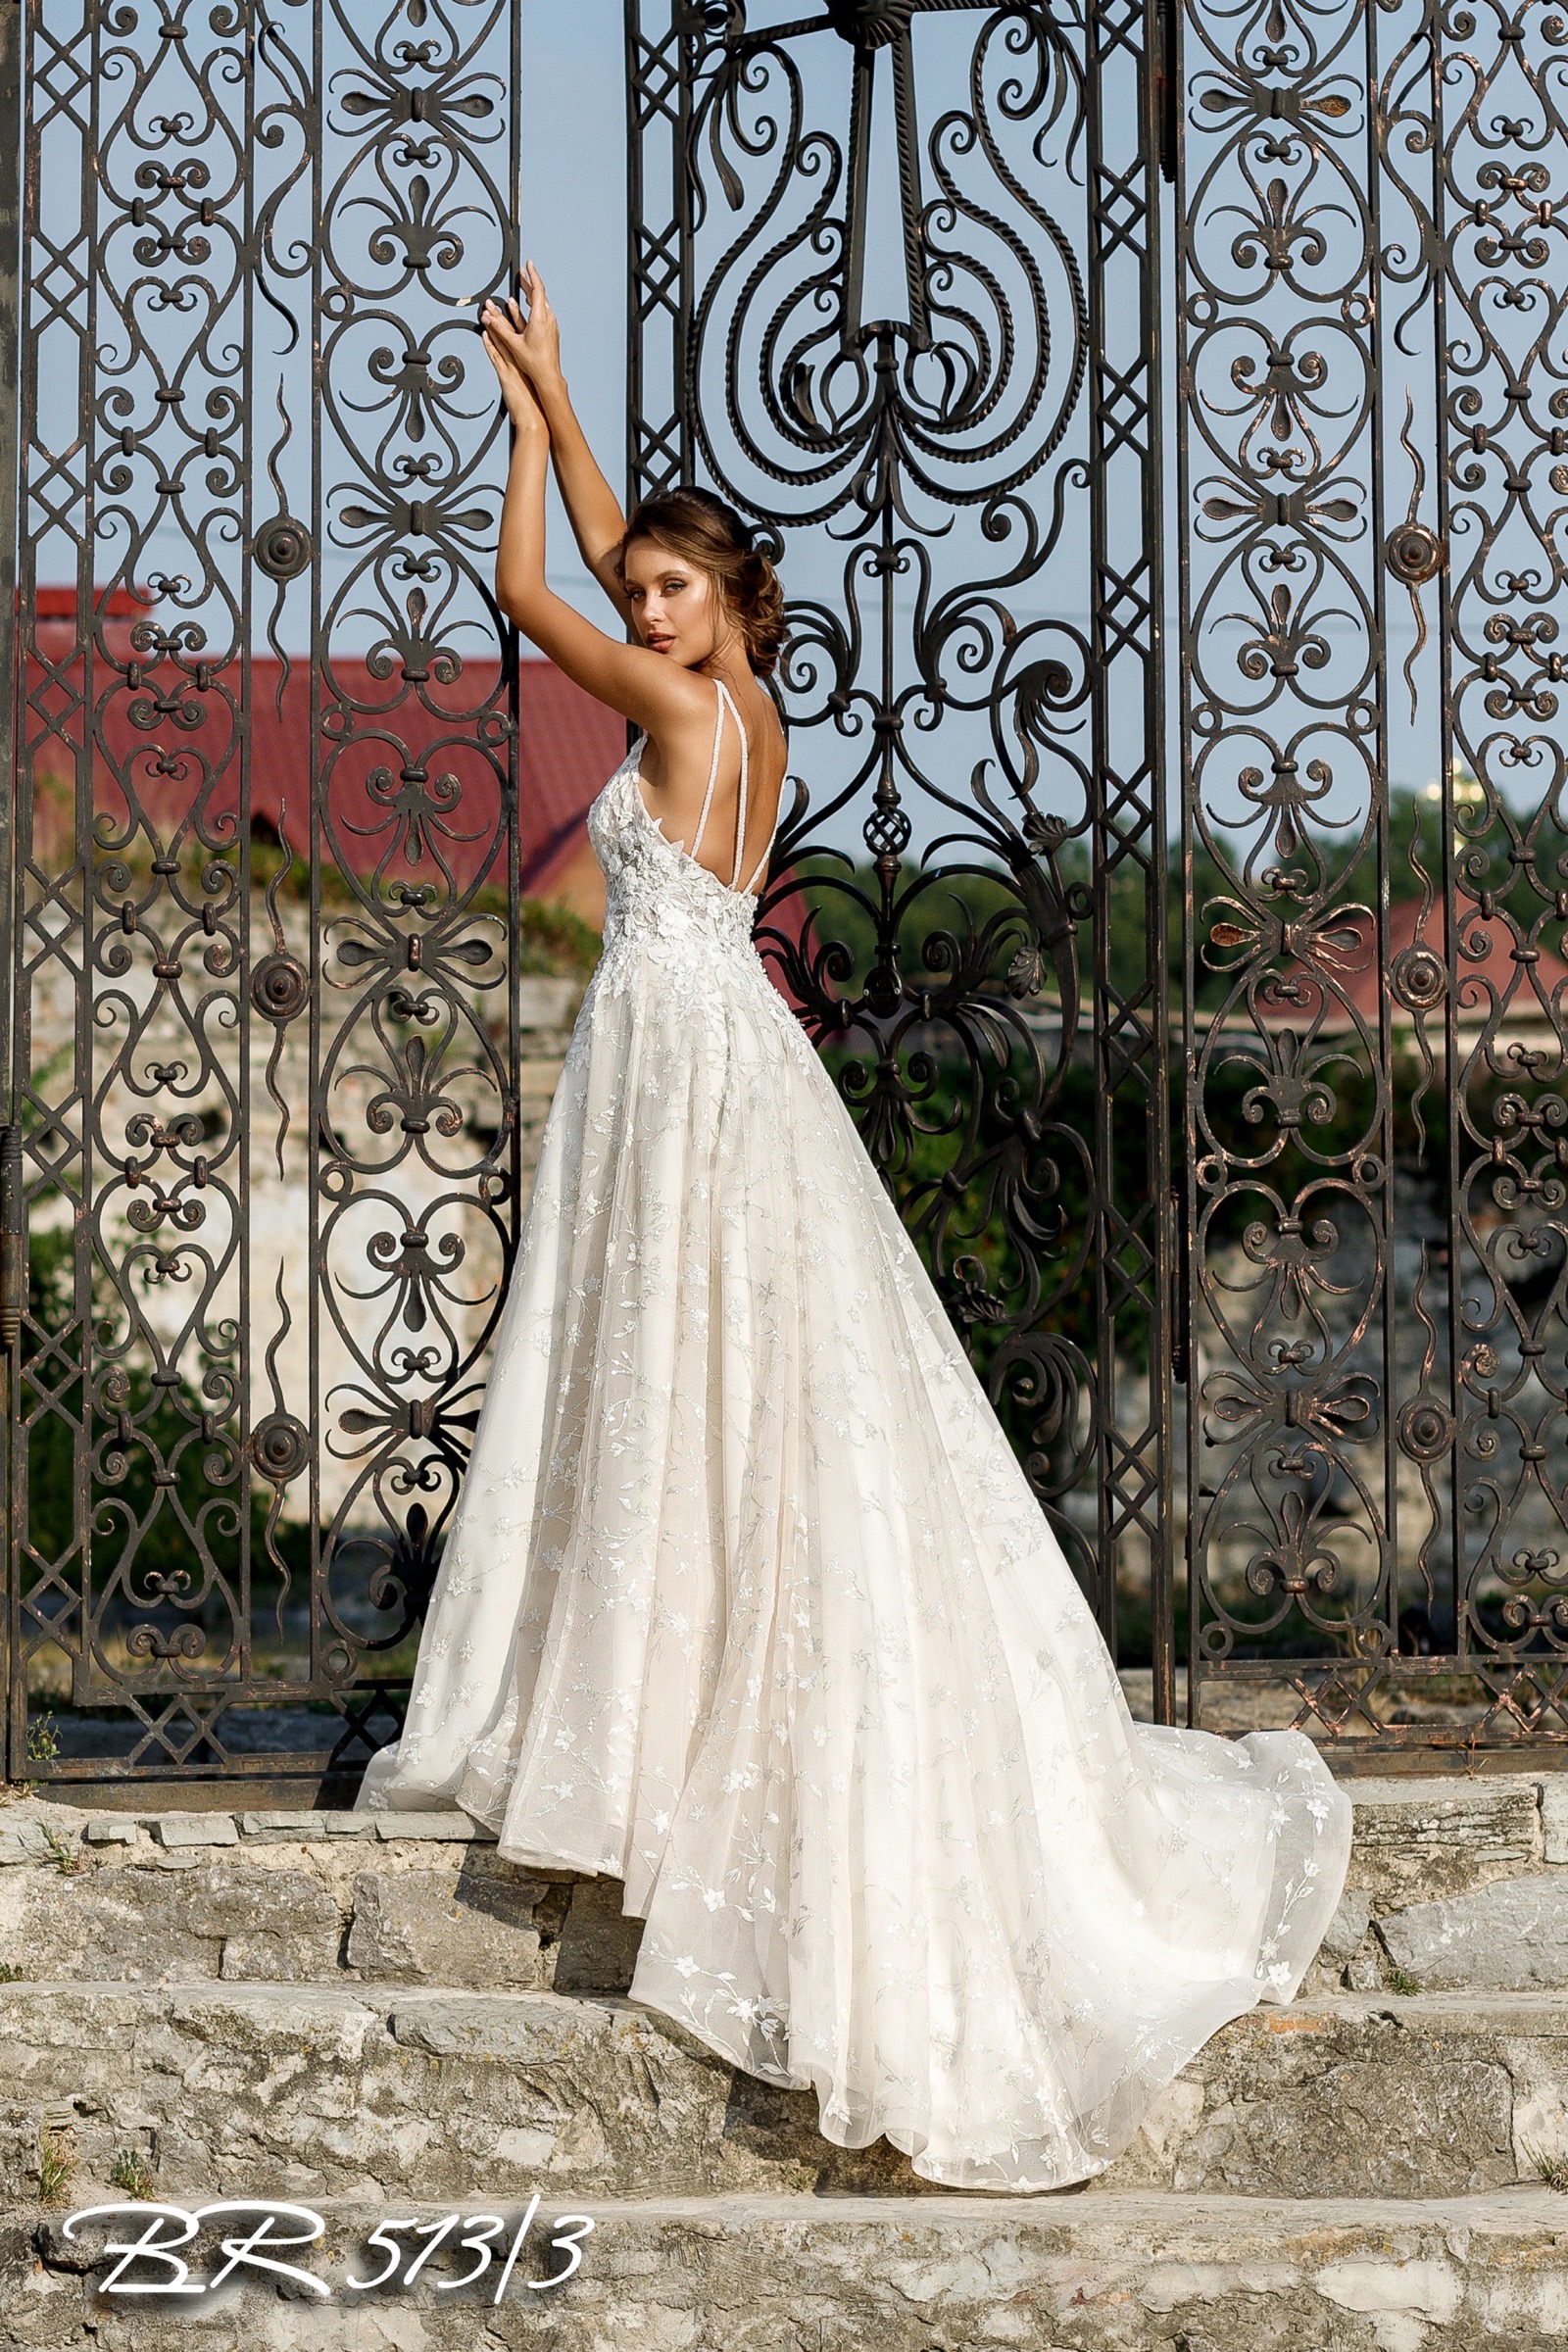 2020 wedding dress A-line v neckline backless spaghetti straps shimmery skirt embroidery lace